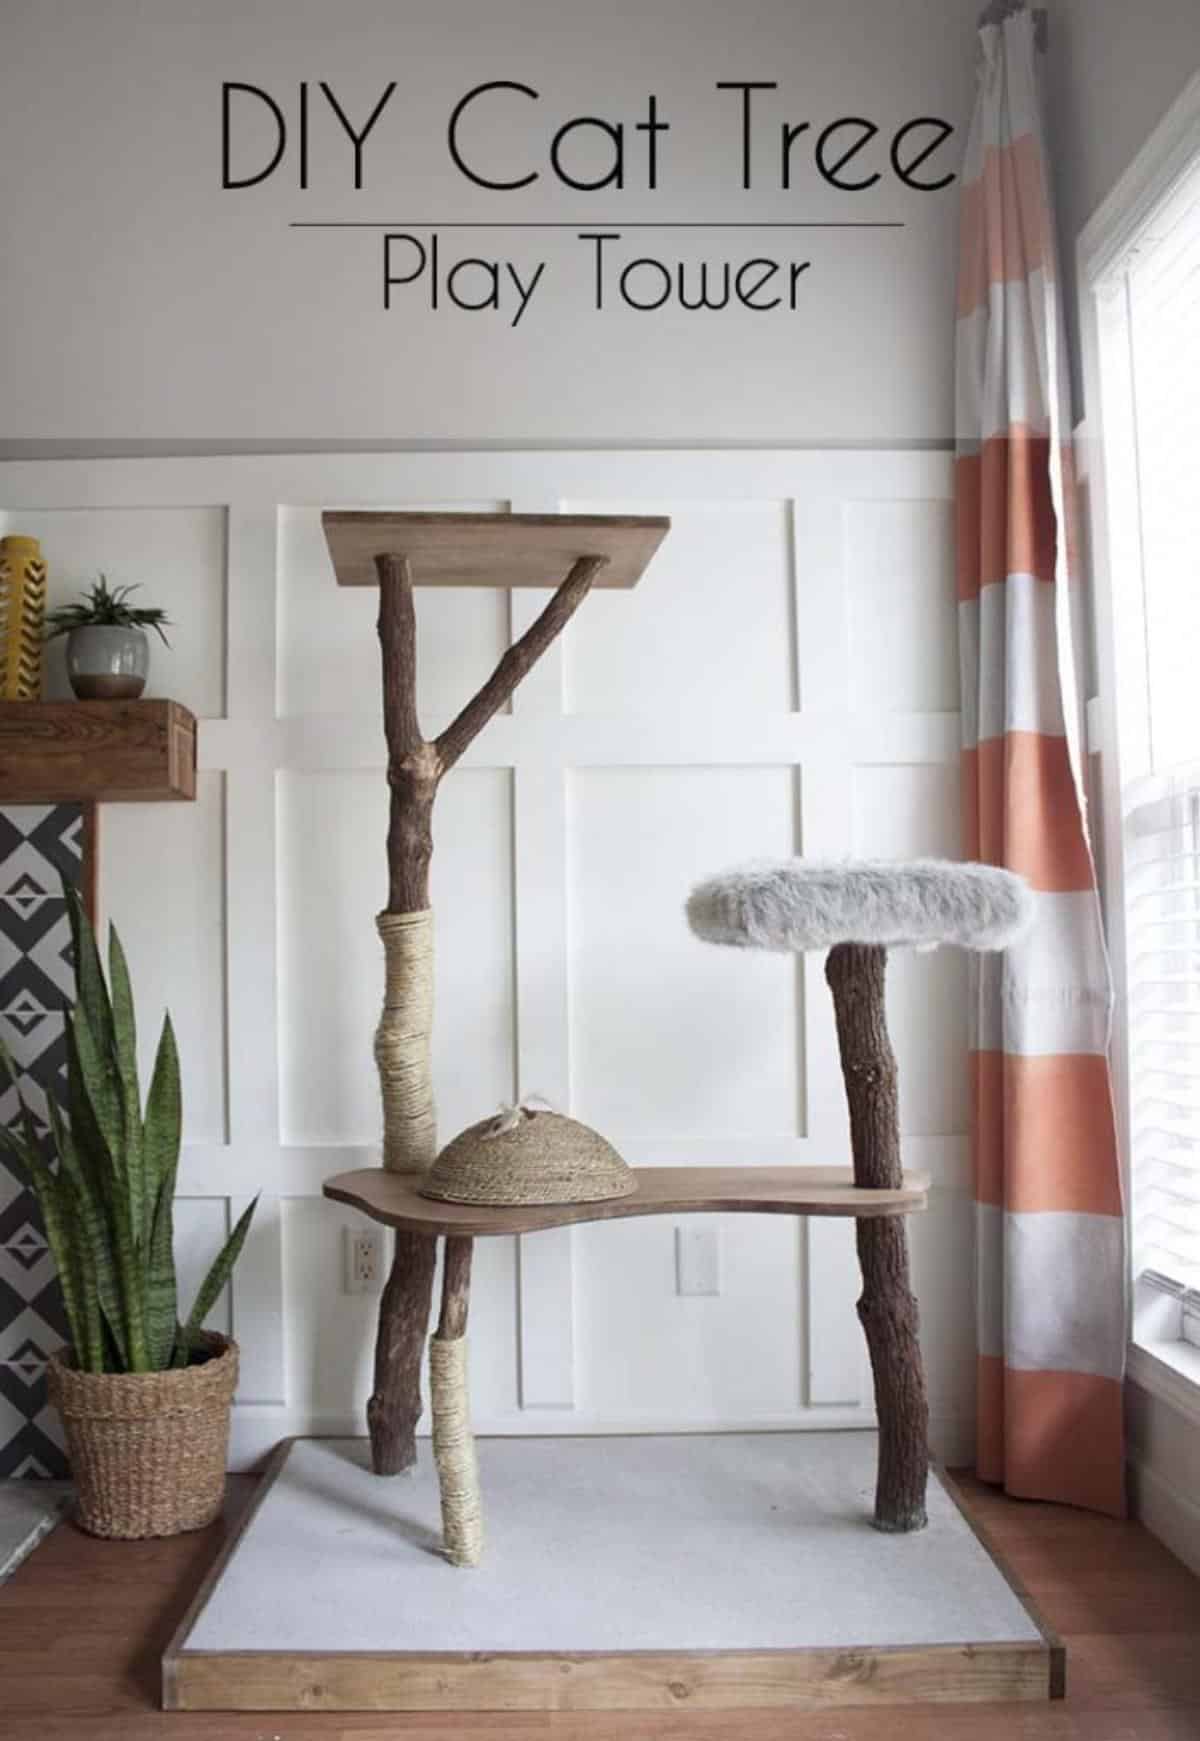 DIY Cat Tree Play Tower